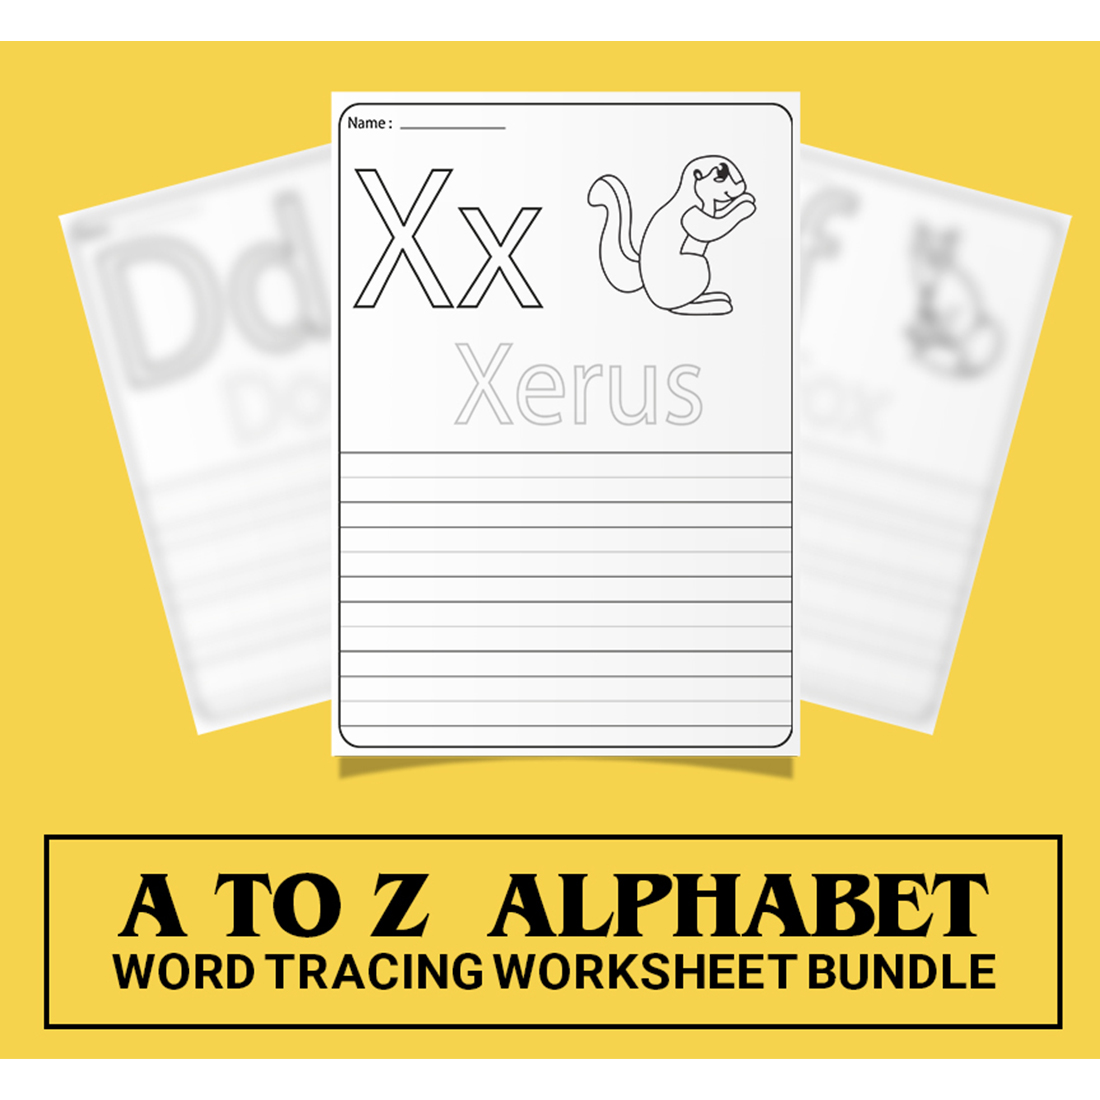 A to Z Mix Alphabets Word Tracing KDP Worksheets Bundle V.1 cover image.